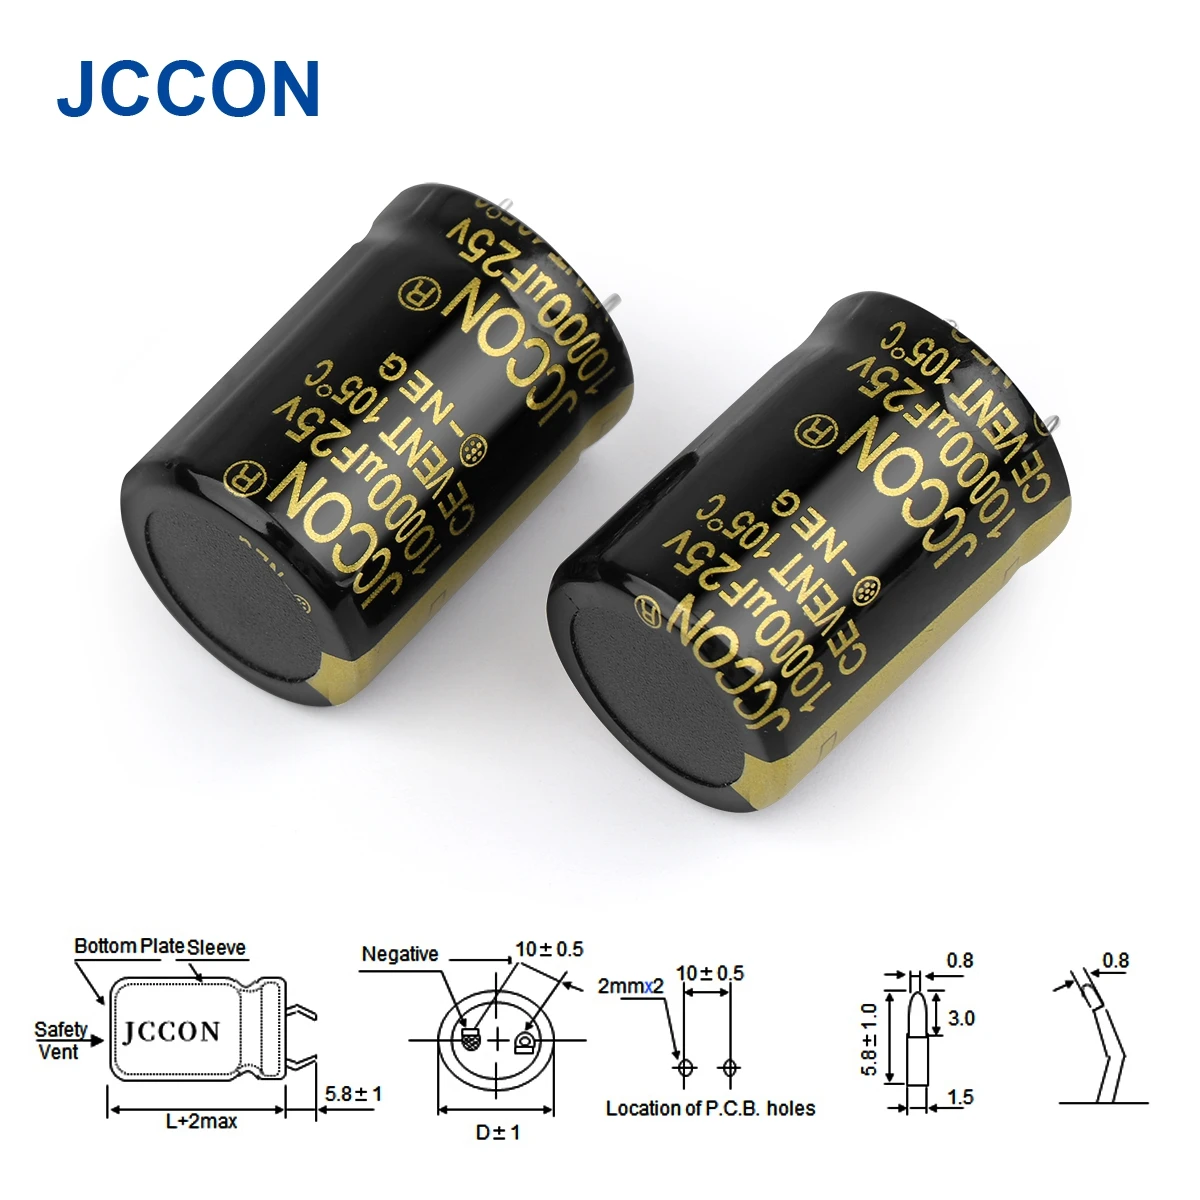 2Pcs JCCON Audio Electrolytic Capacitor 50V10000UF For Hifi Amplifier Low ESR